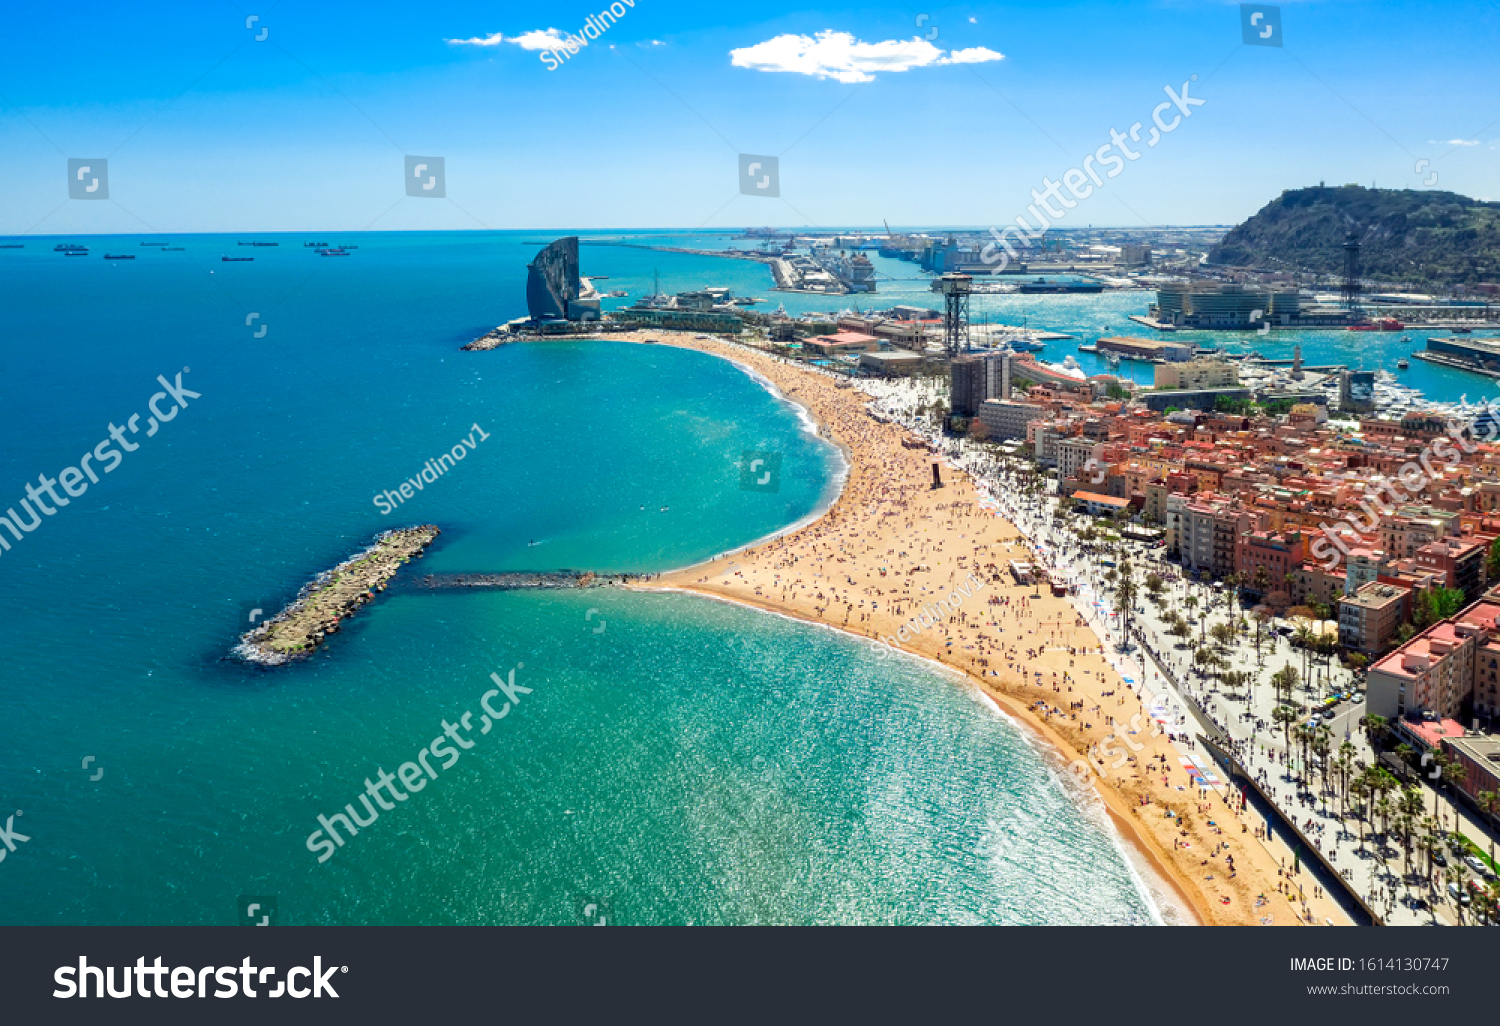 Barcelona central beach aerial view Sant Miquel Sebastian plage Barceloneta district catalonia #1614130747